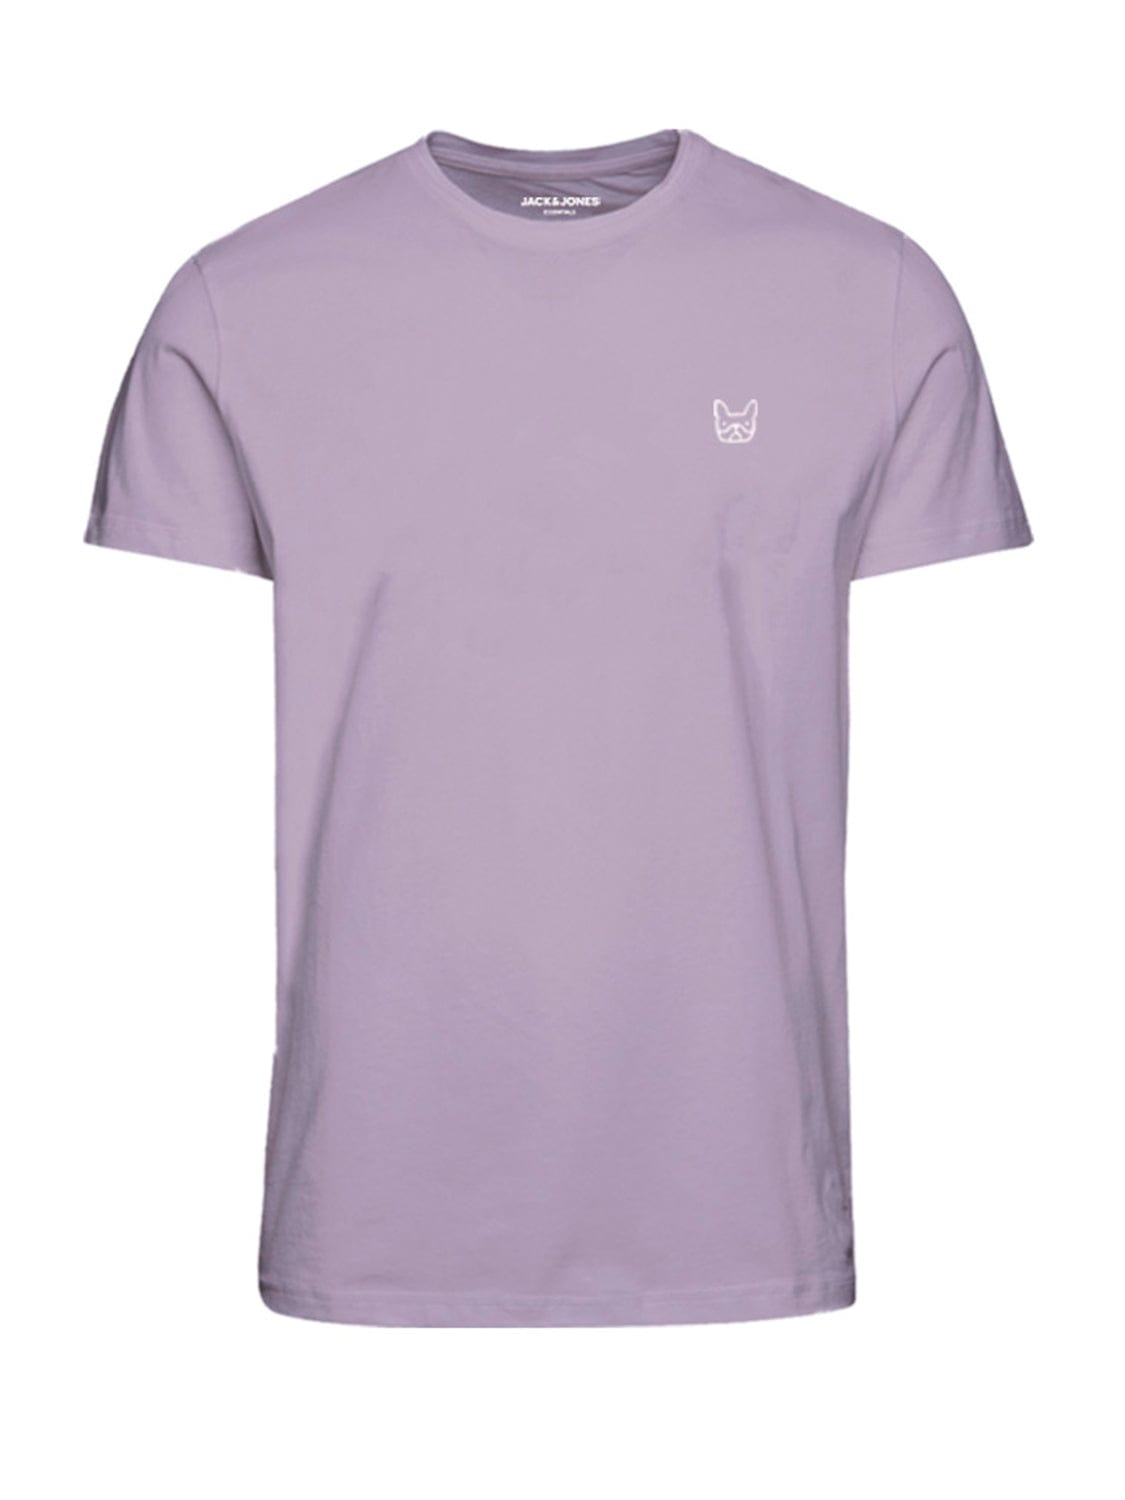 Camiseta básica de algodón orgánico logo bordado lila - JJBASIC